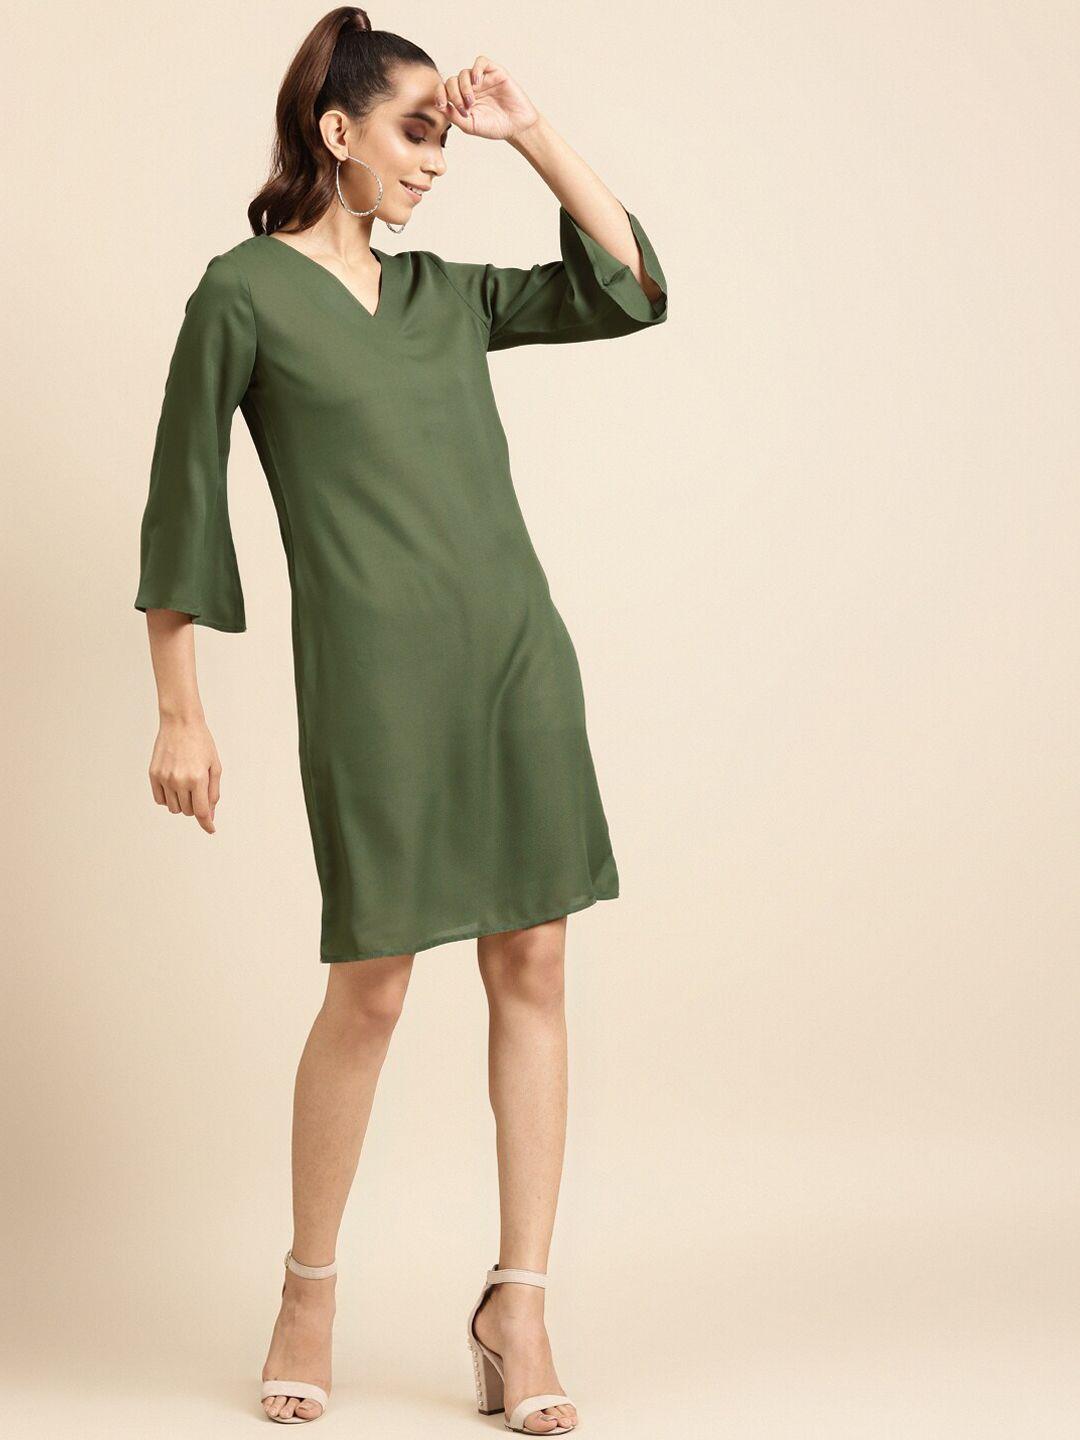 dodo-&-moa-women-green-solid-v-neck-fit-&-flare-dress